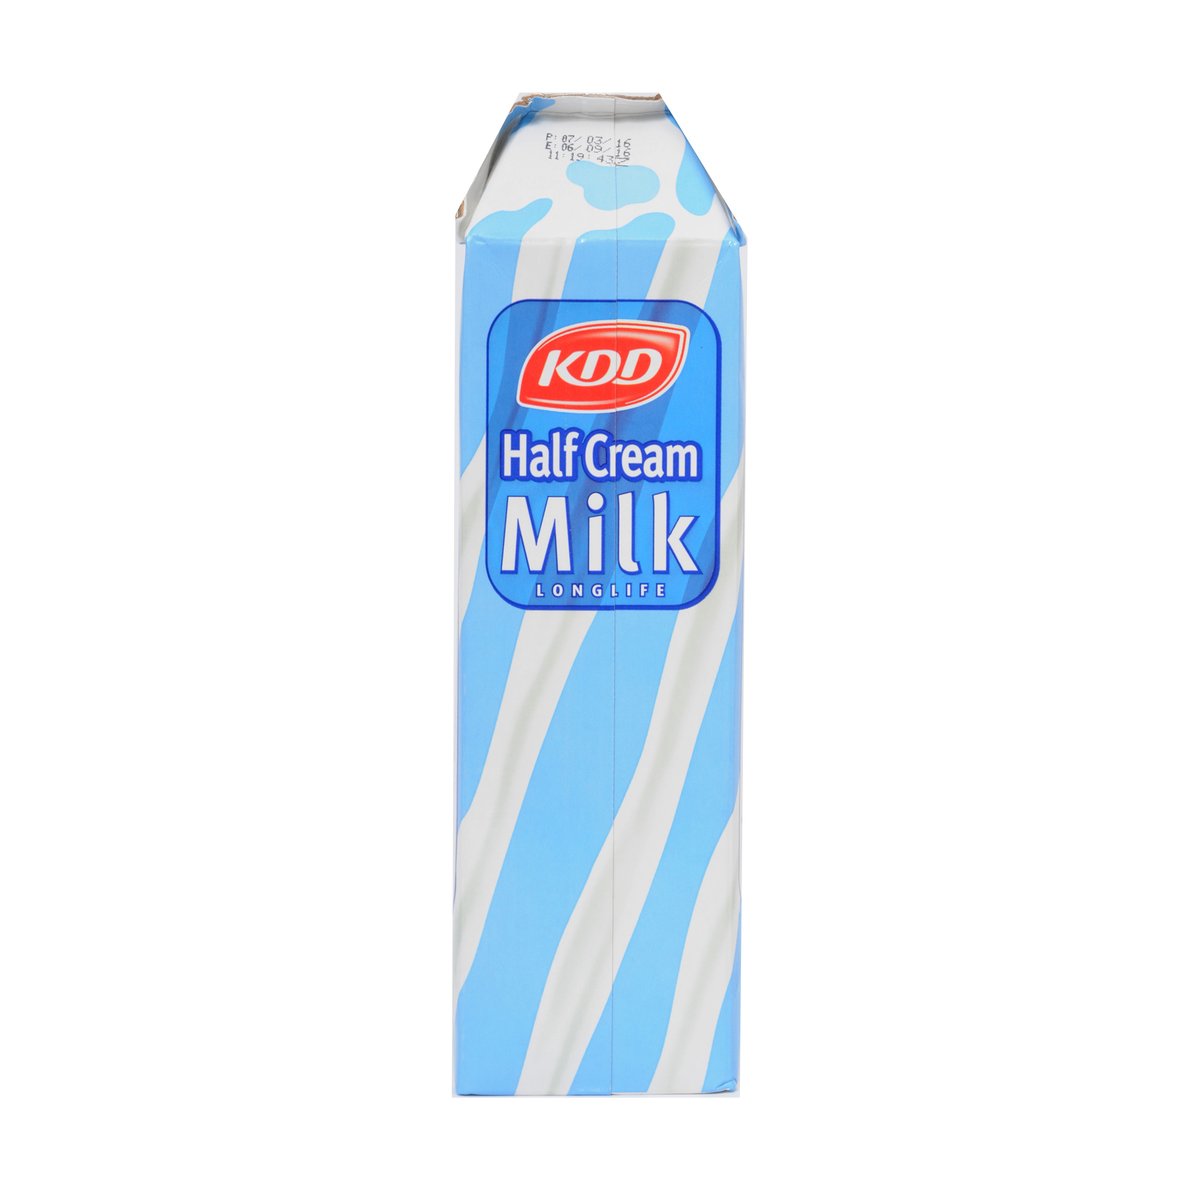 KDD Half Cream Milk Long Life 1Litre x 4 Pieces